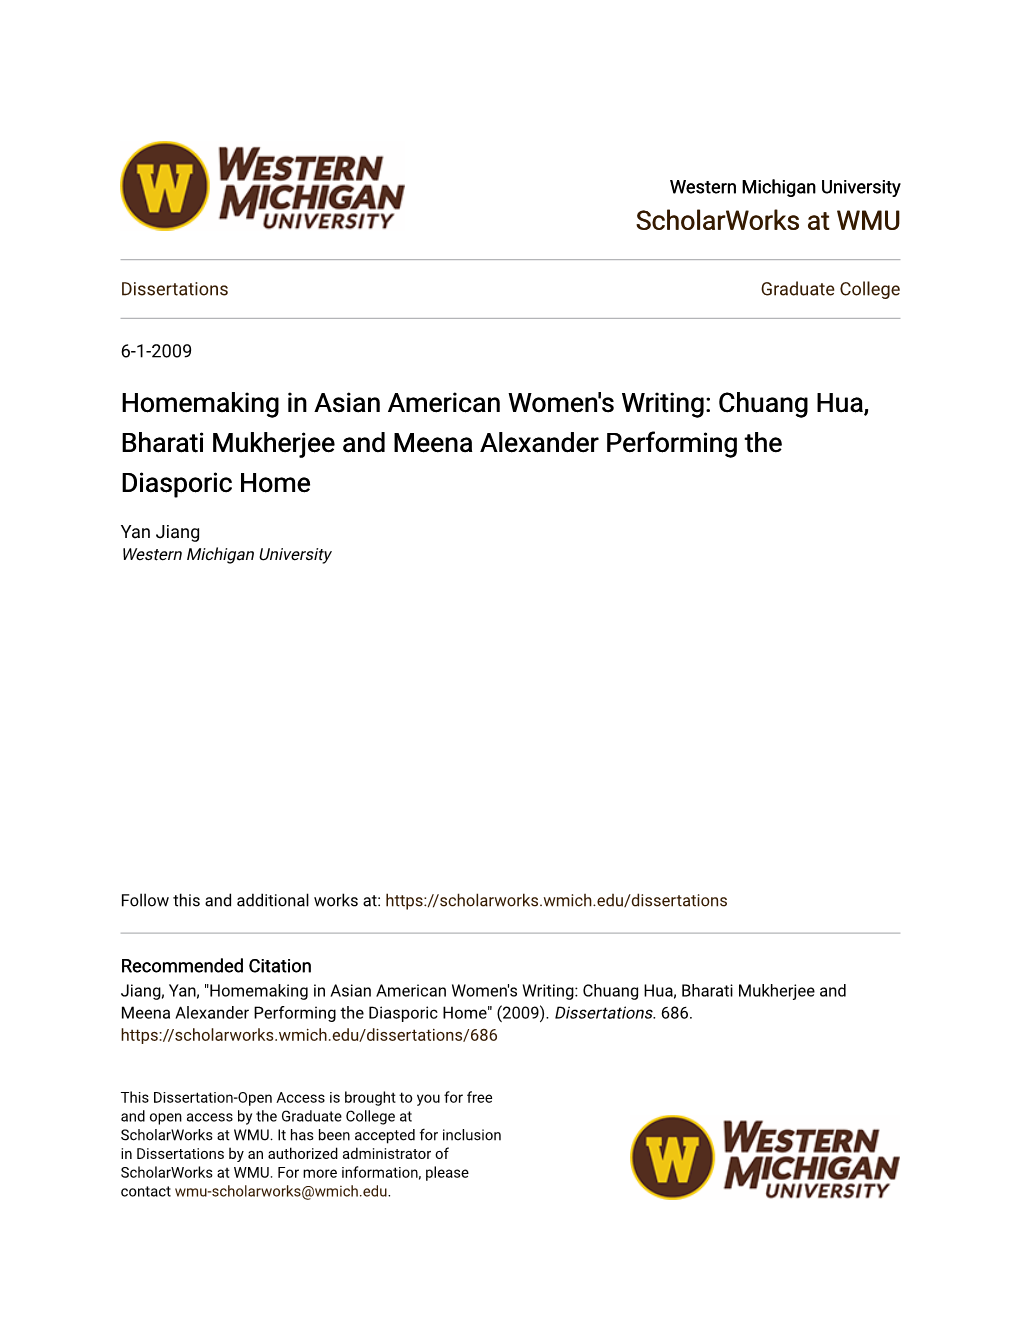 Homemaking in Asian American Women's Writing: Chuang Hua, Bharati Mukherjee and Meena Alexander Performing the Diasporic Home